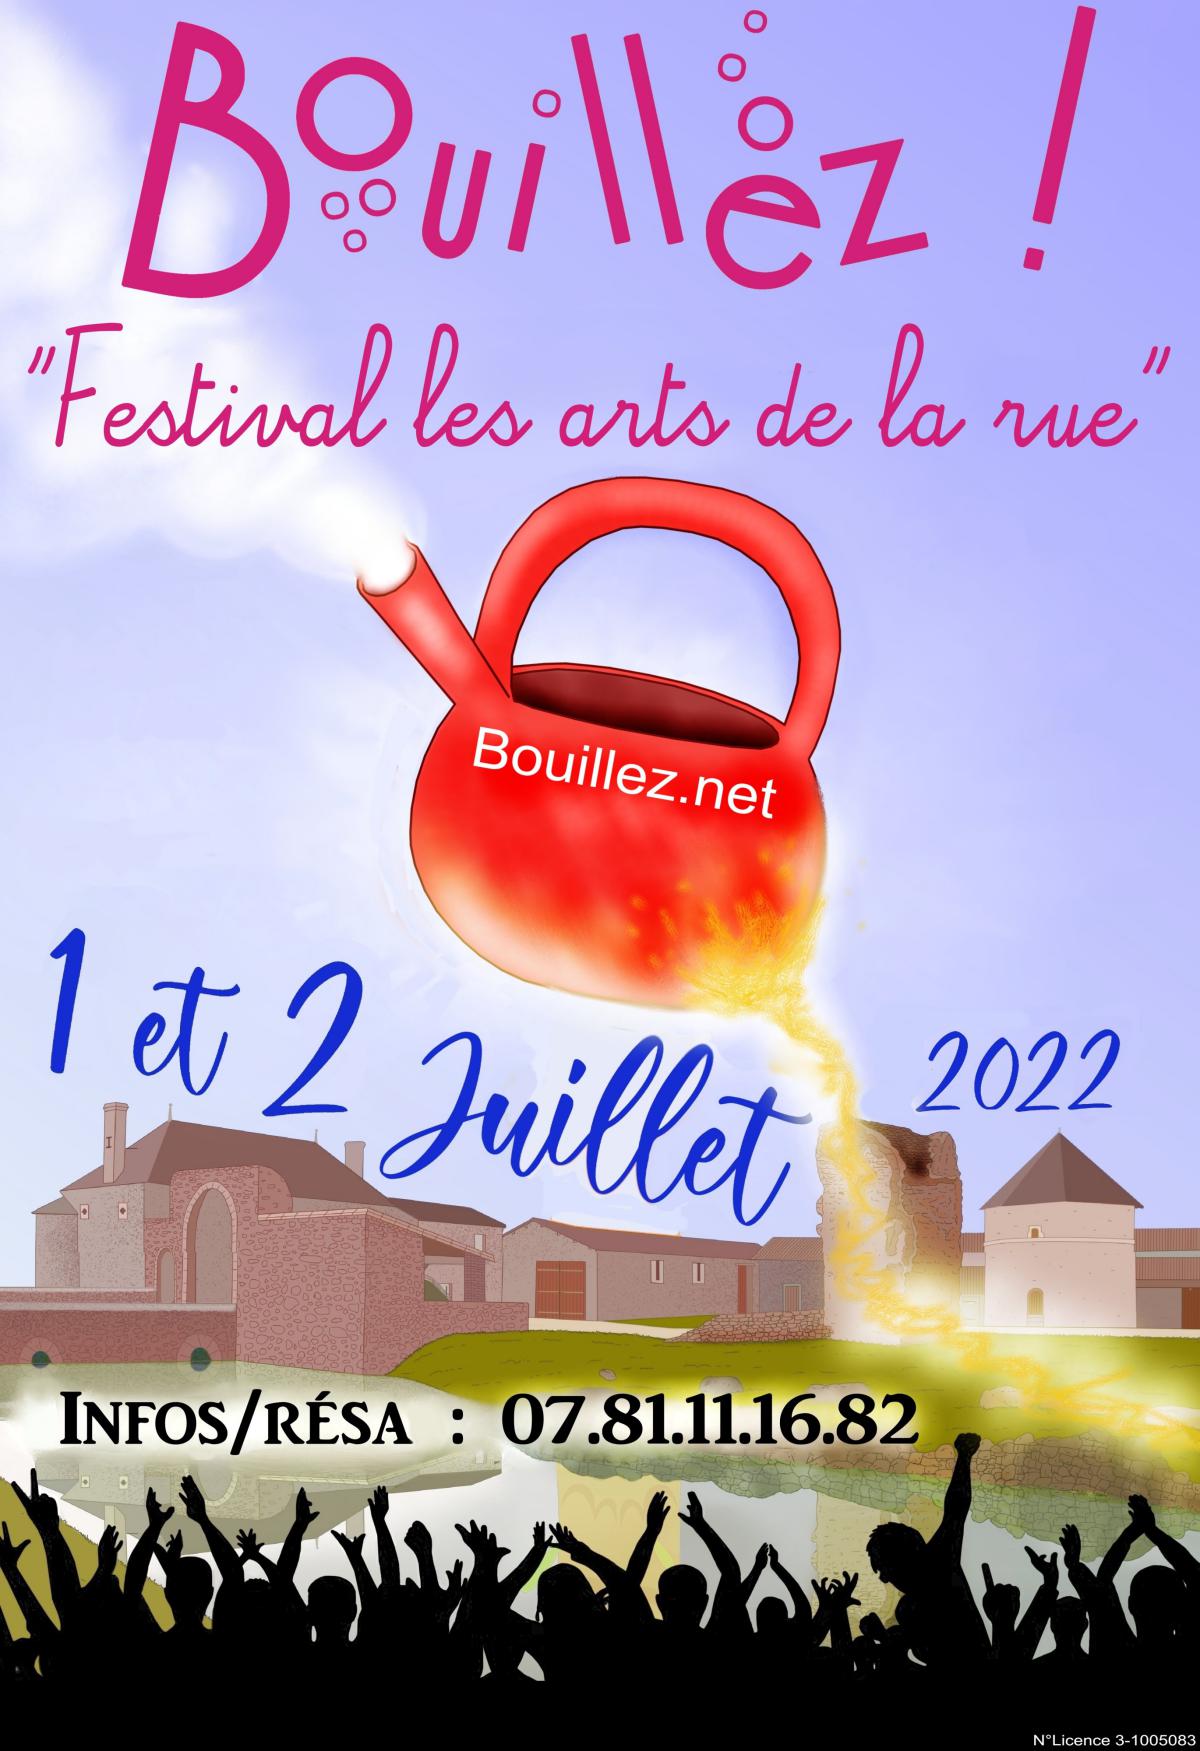 Festival Bouillez !